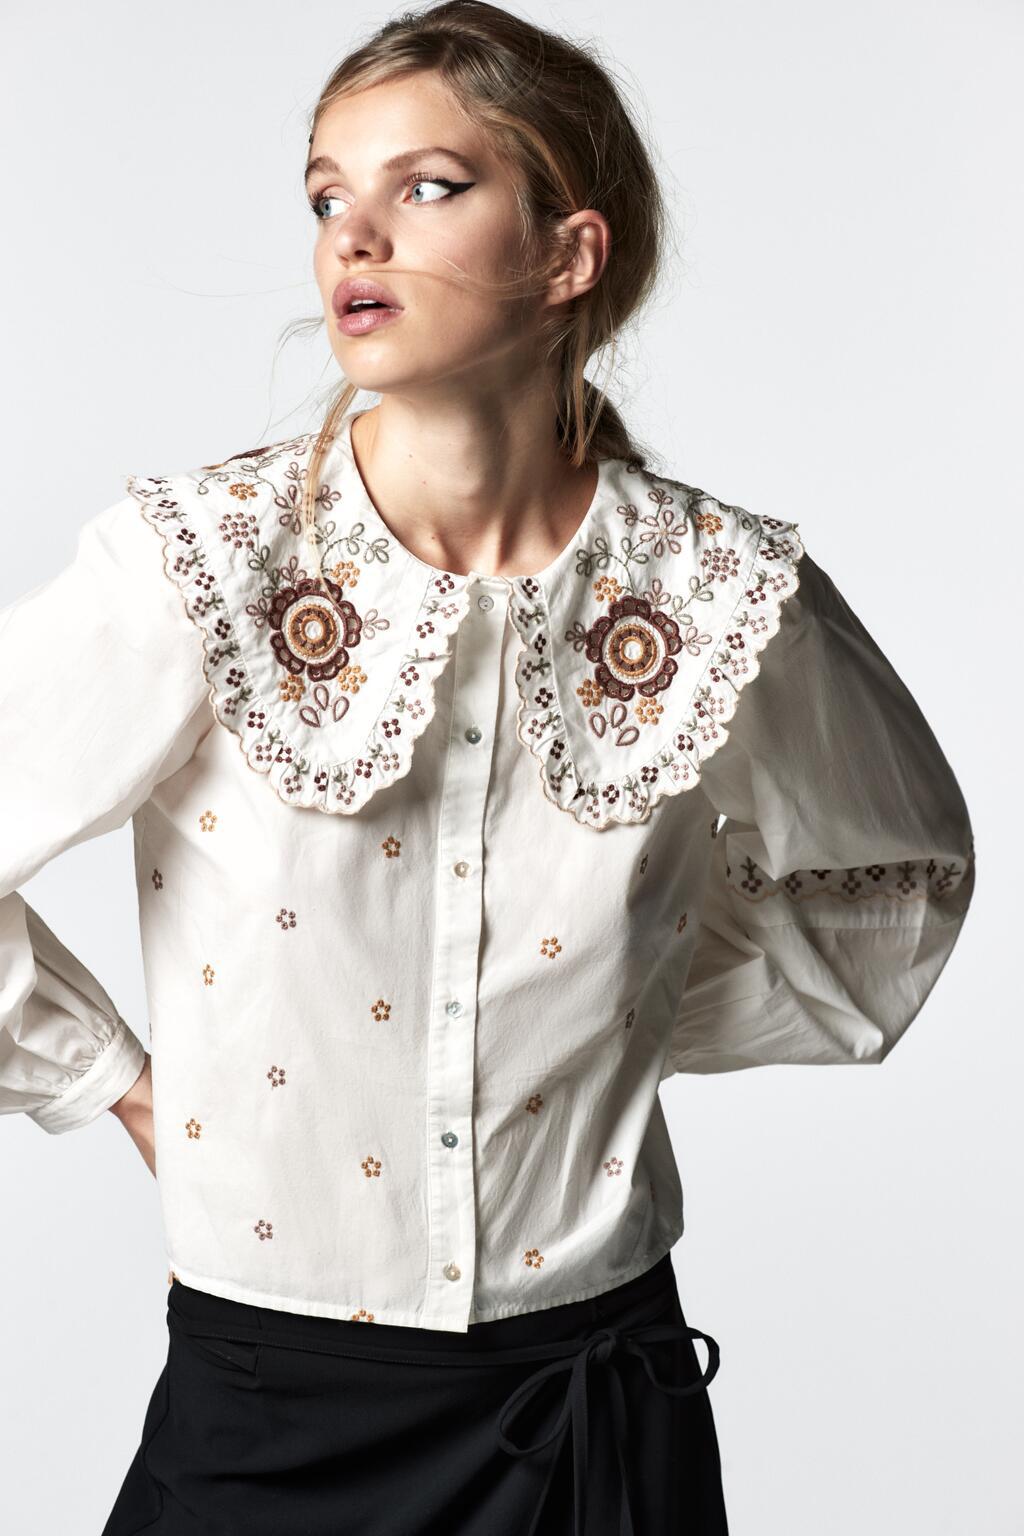 OOTDGIRL Spring Women Flower Embroidery Peter Pan Collar White Shirt Female Long Sleeve Blouse Lady Loose Tops Blusas